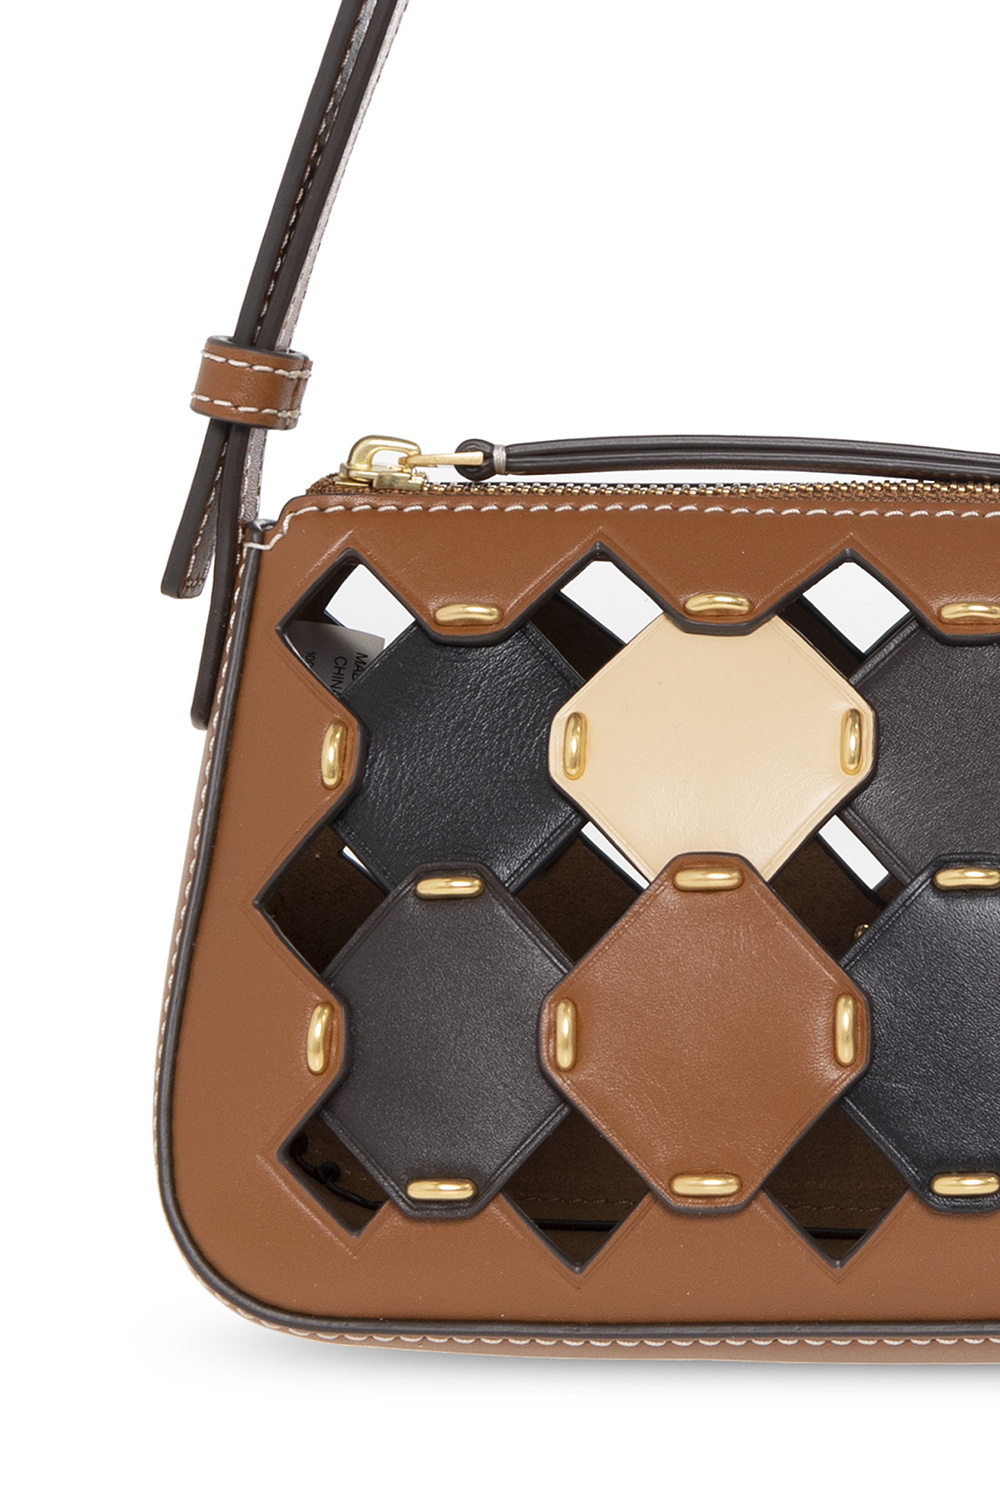 2017 Mens Vuitton Burch Marc Leather Handbag Tote Michael Louis Tory Kate Briefcase  Shoulder Bag Emporio Jacobss Kor Spade Messenger Bag From Sweater119,  $37.18